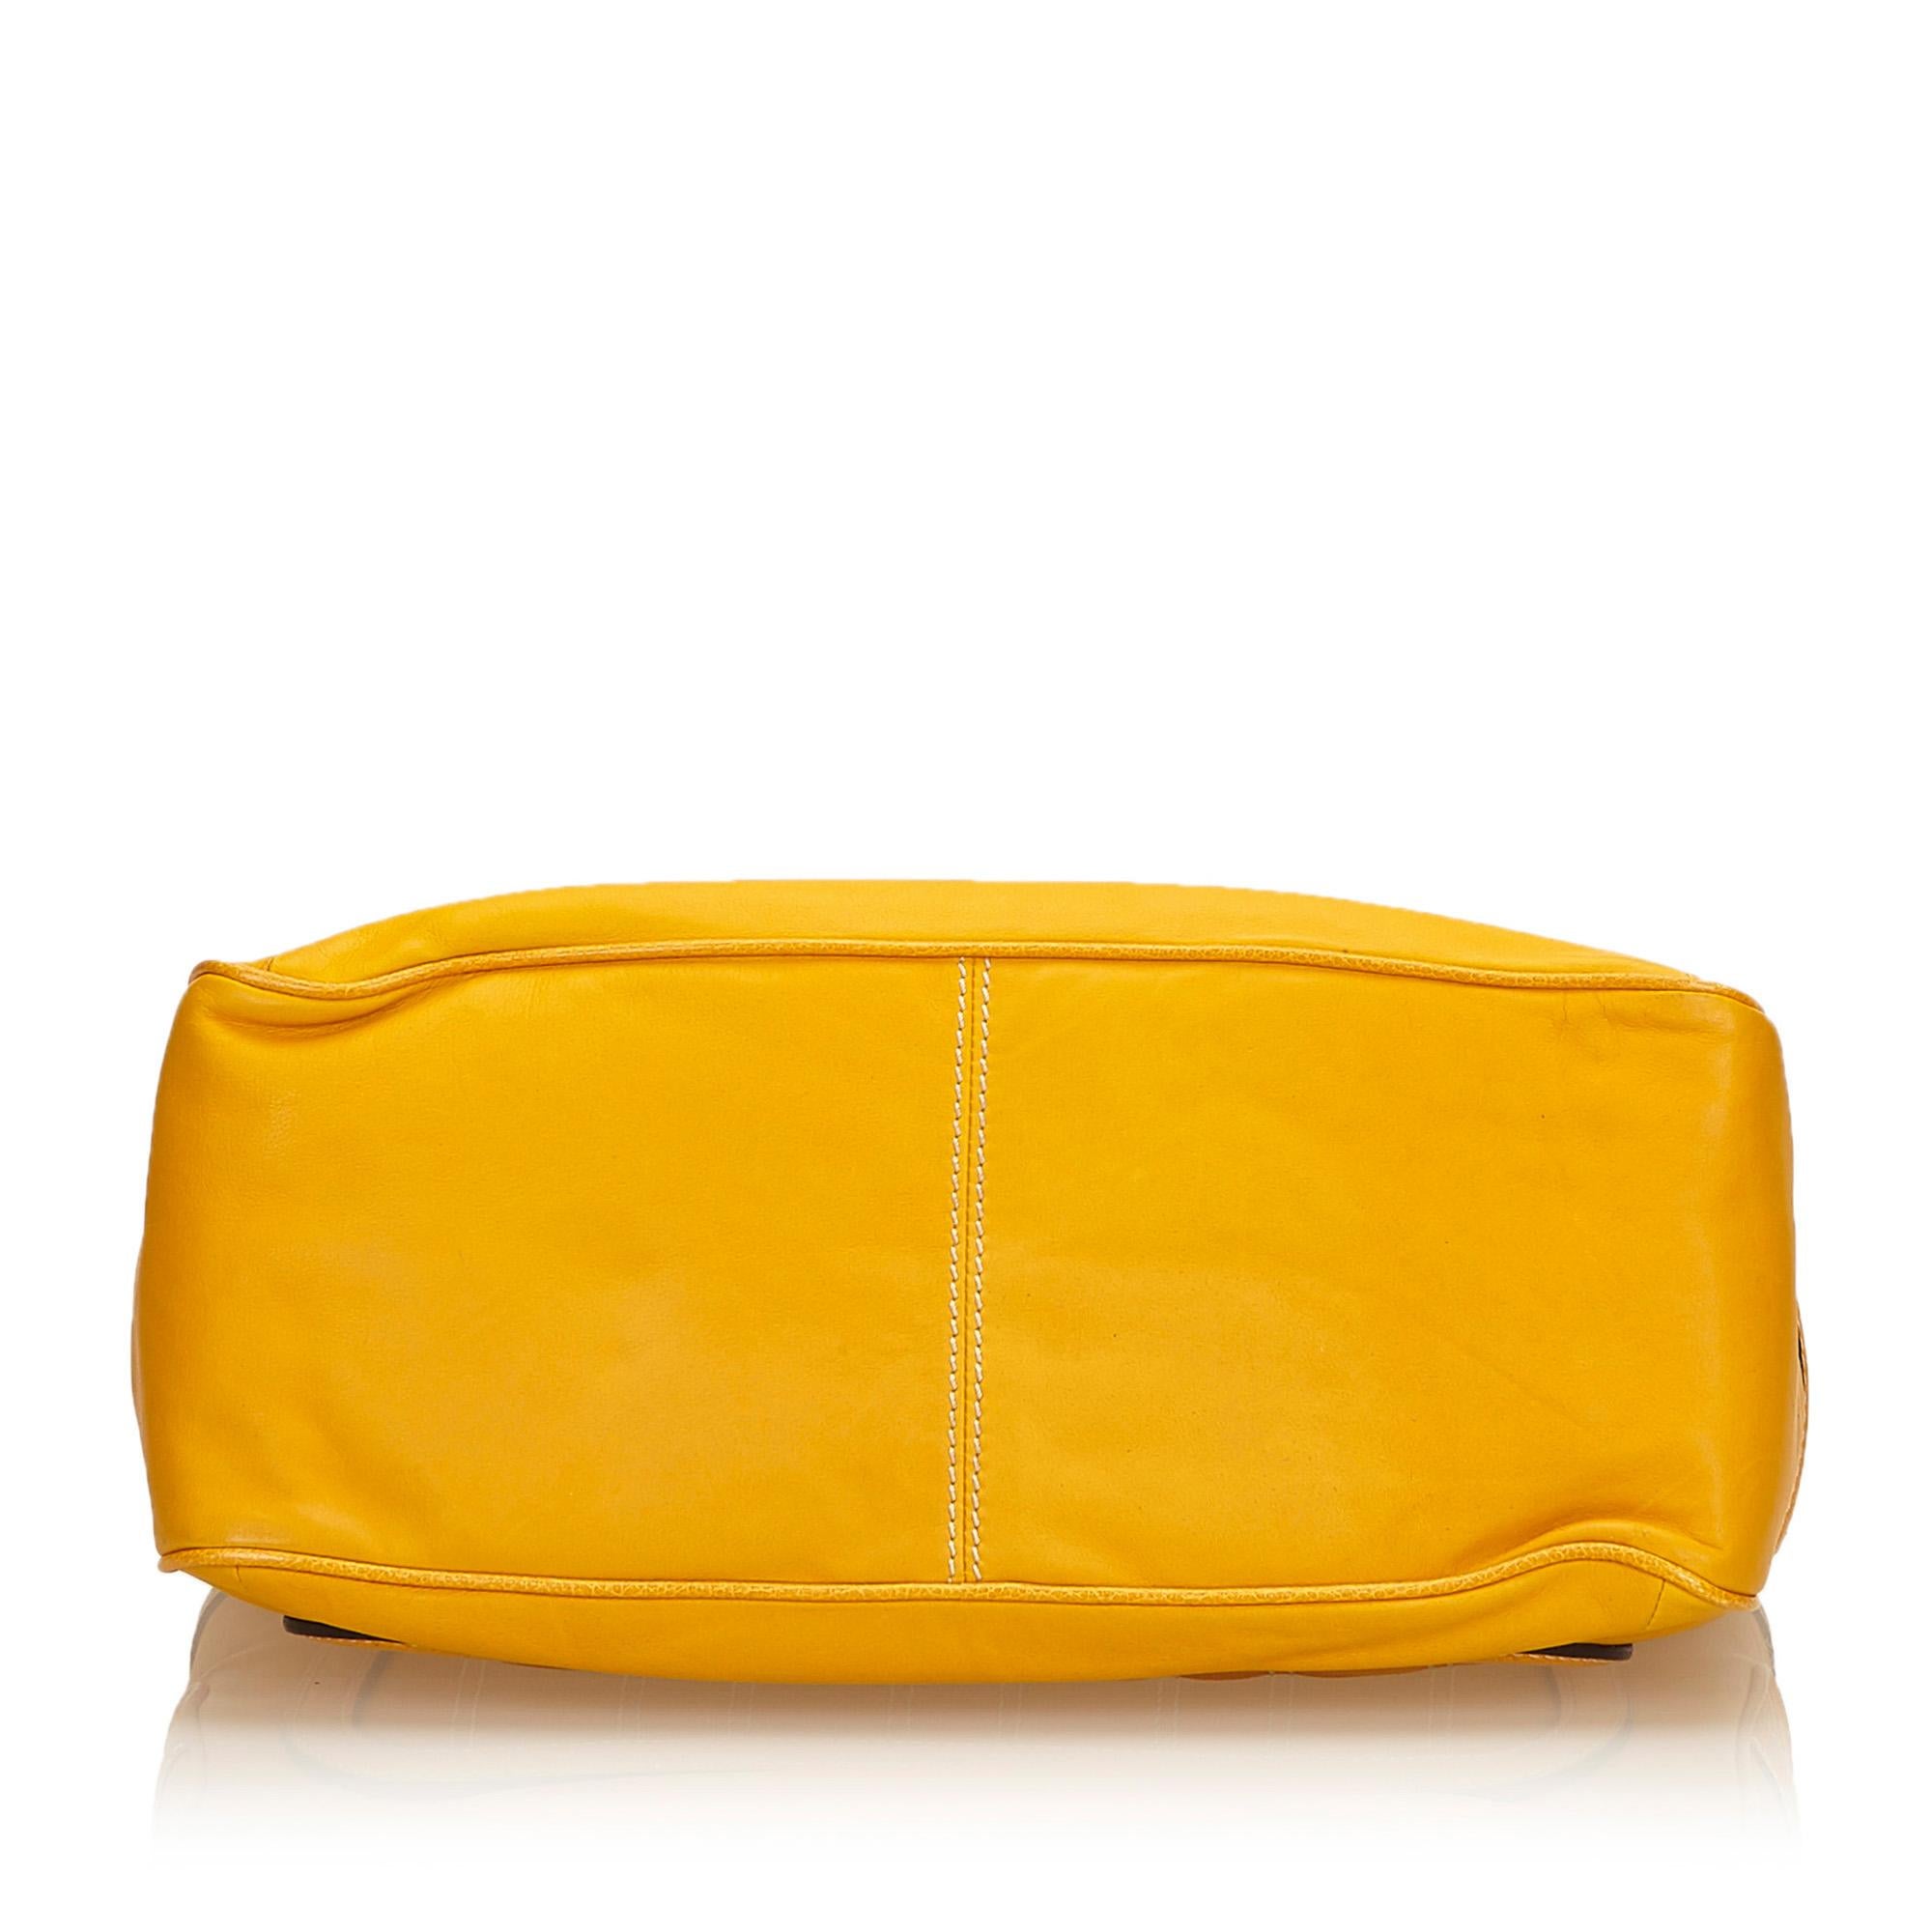 Celine Orange Leather Boogie Bag In Good Condition For Sale In Orlando, FL